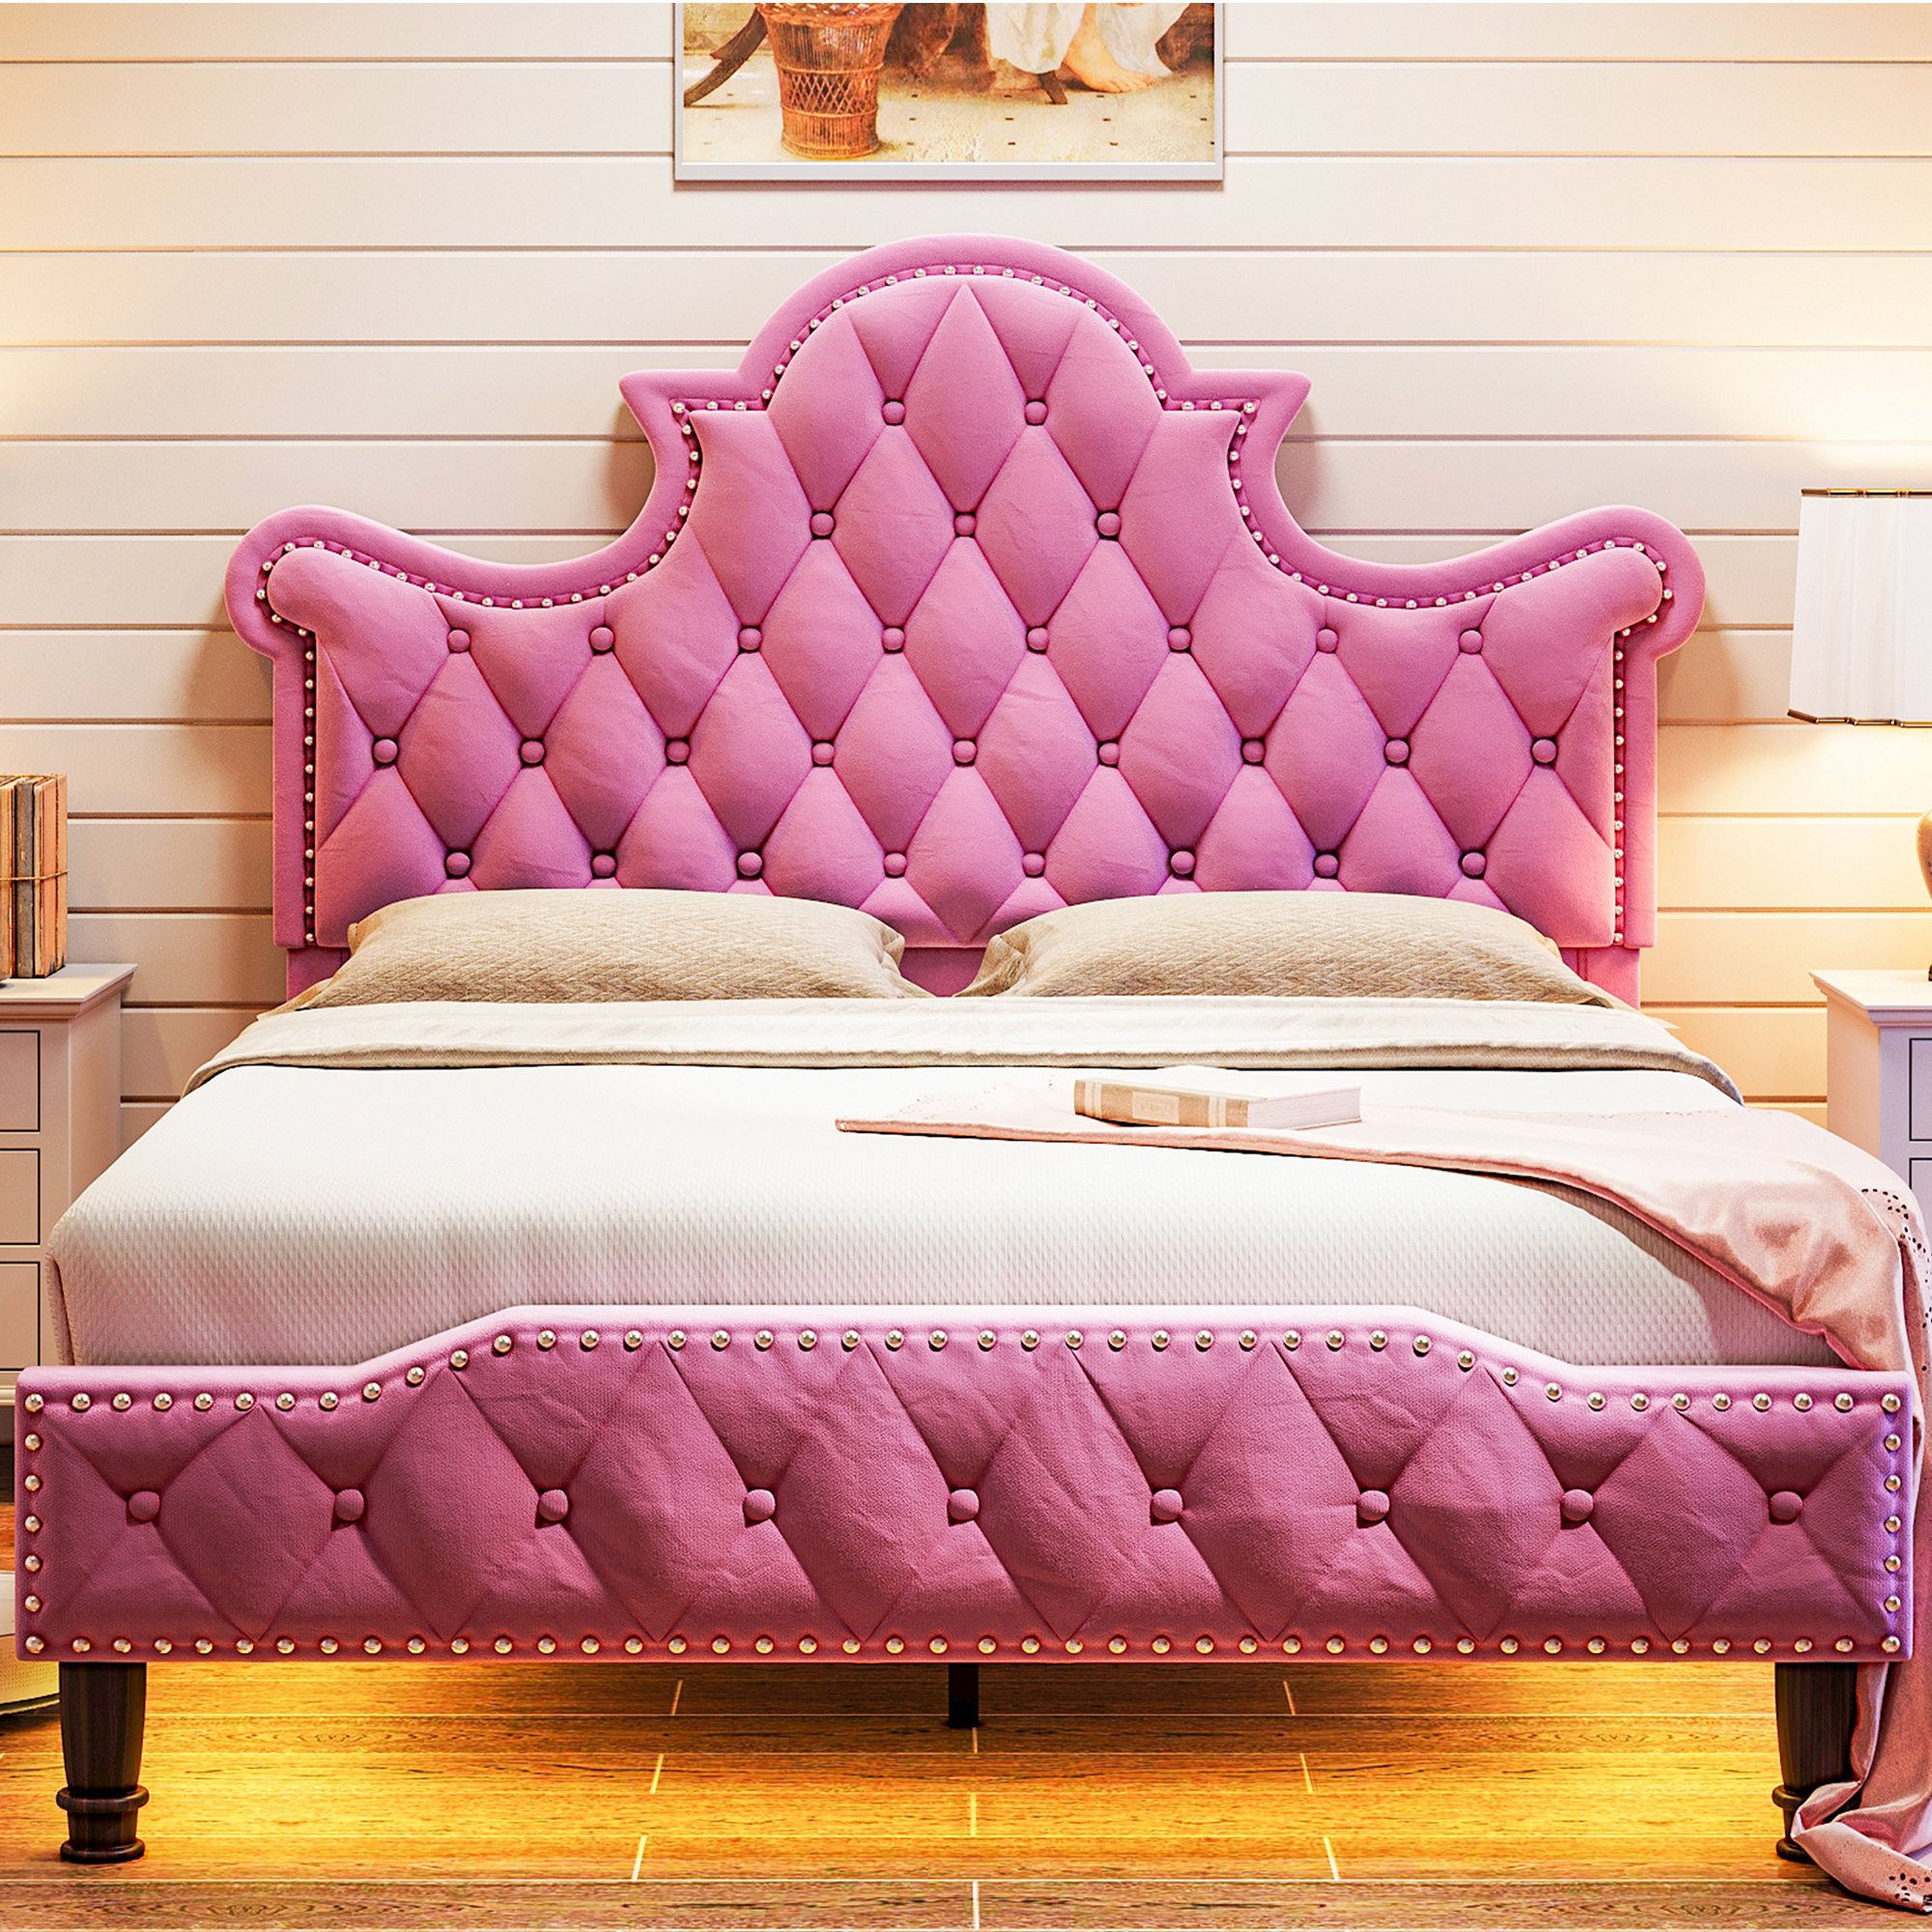 Serta Pink life luxury